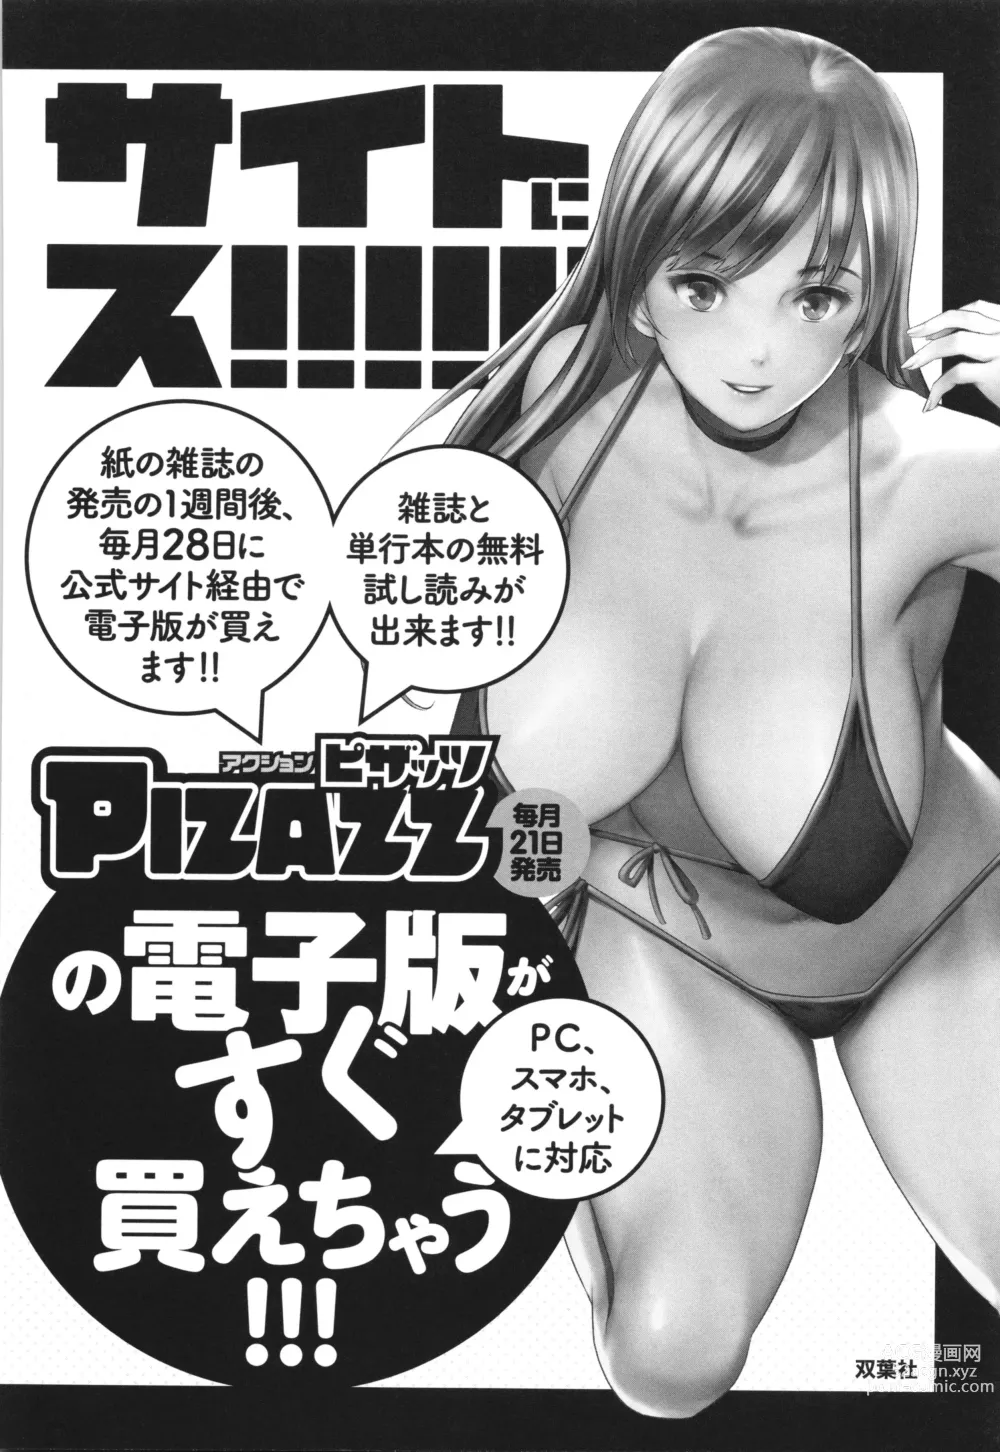 Page 196 of manga Compla Yuruyuru Chimari-san  - Chimaris compliance awareness is very lax.